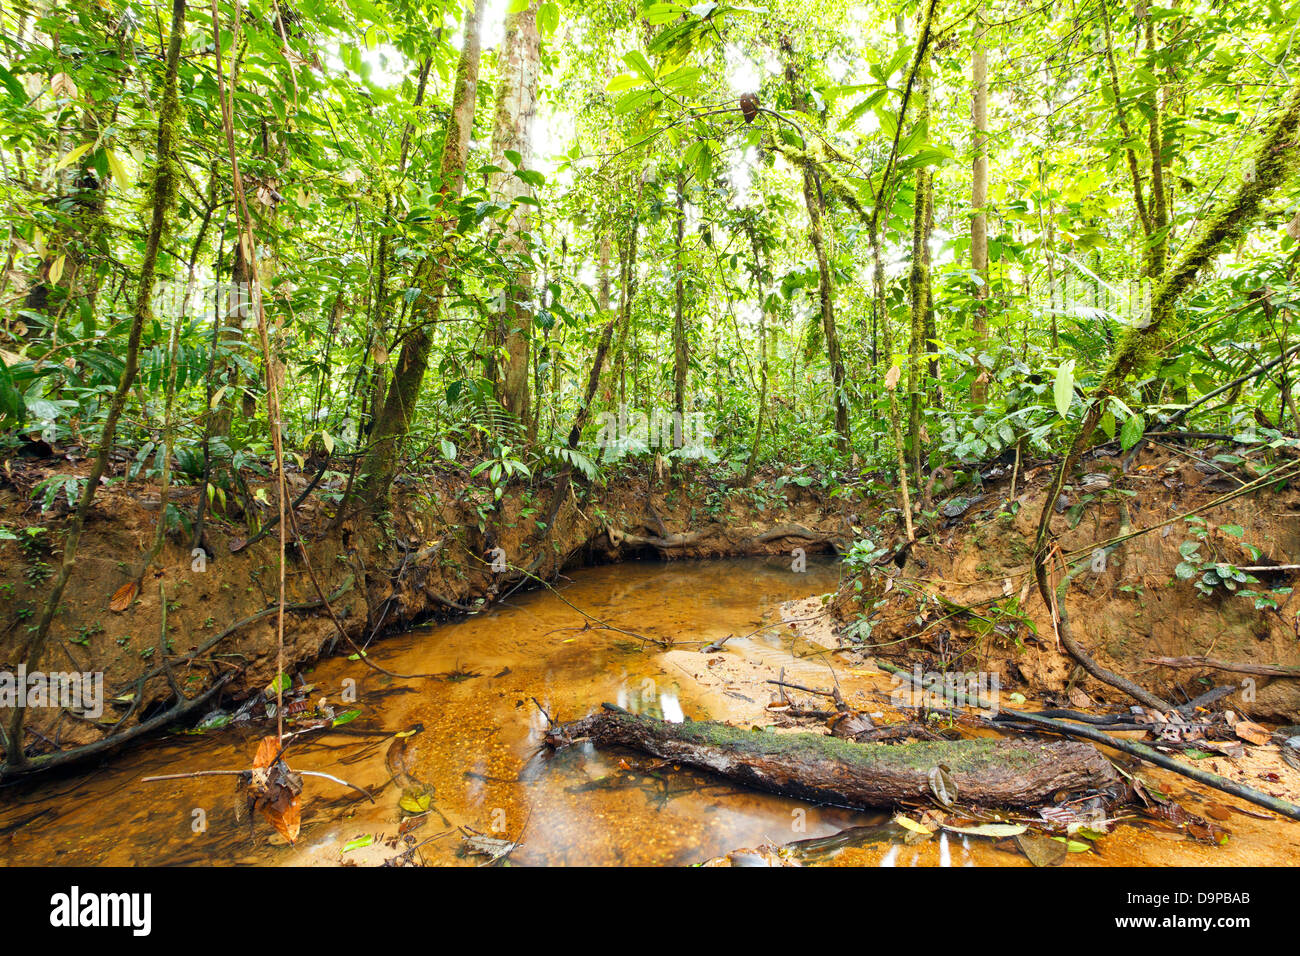 Stream winding through lowland tropical rainforest in the Ecuadorian Amazon Stock Photo